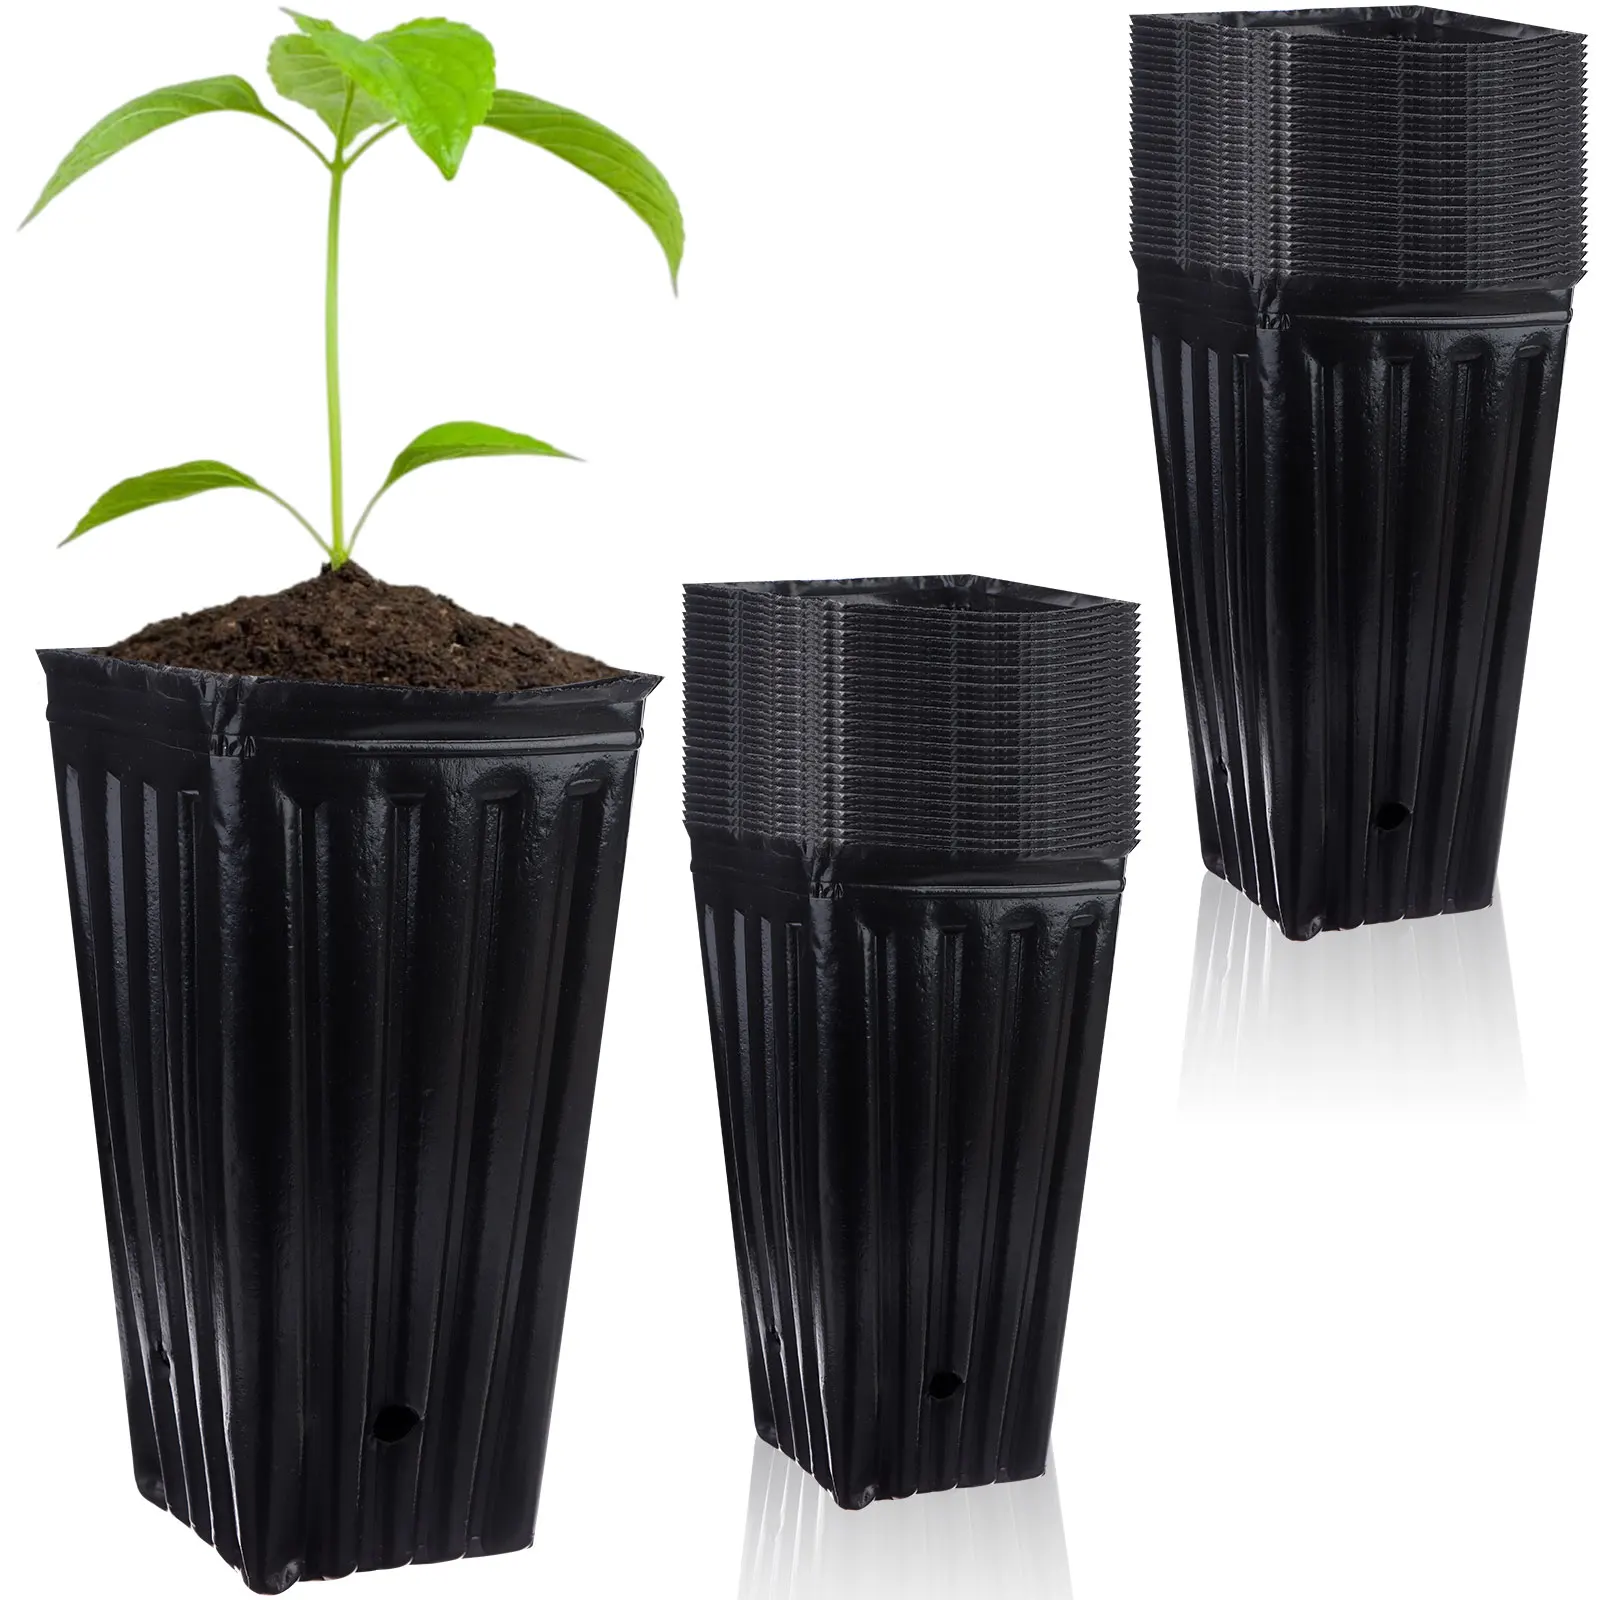 

70Pcs Tall Tree Pots Plastic Deep Nursery Treepots Tall Seedling Flower Plant Container Pots with Drainage Holes Seedling Nurser